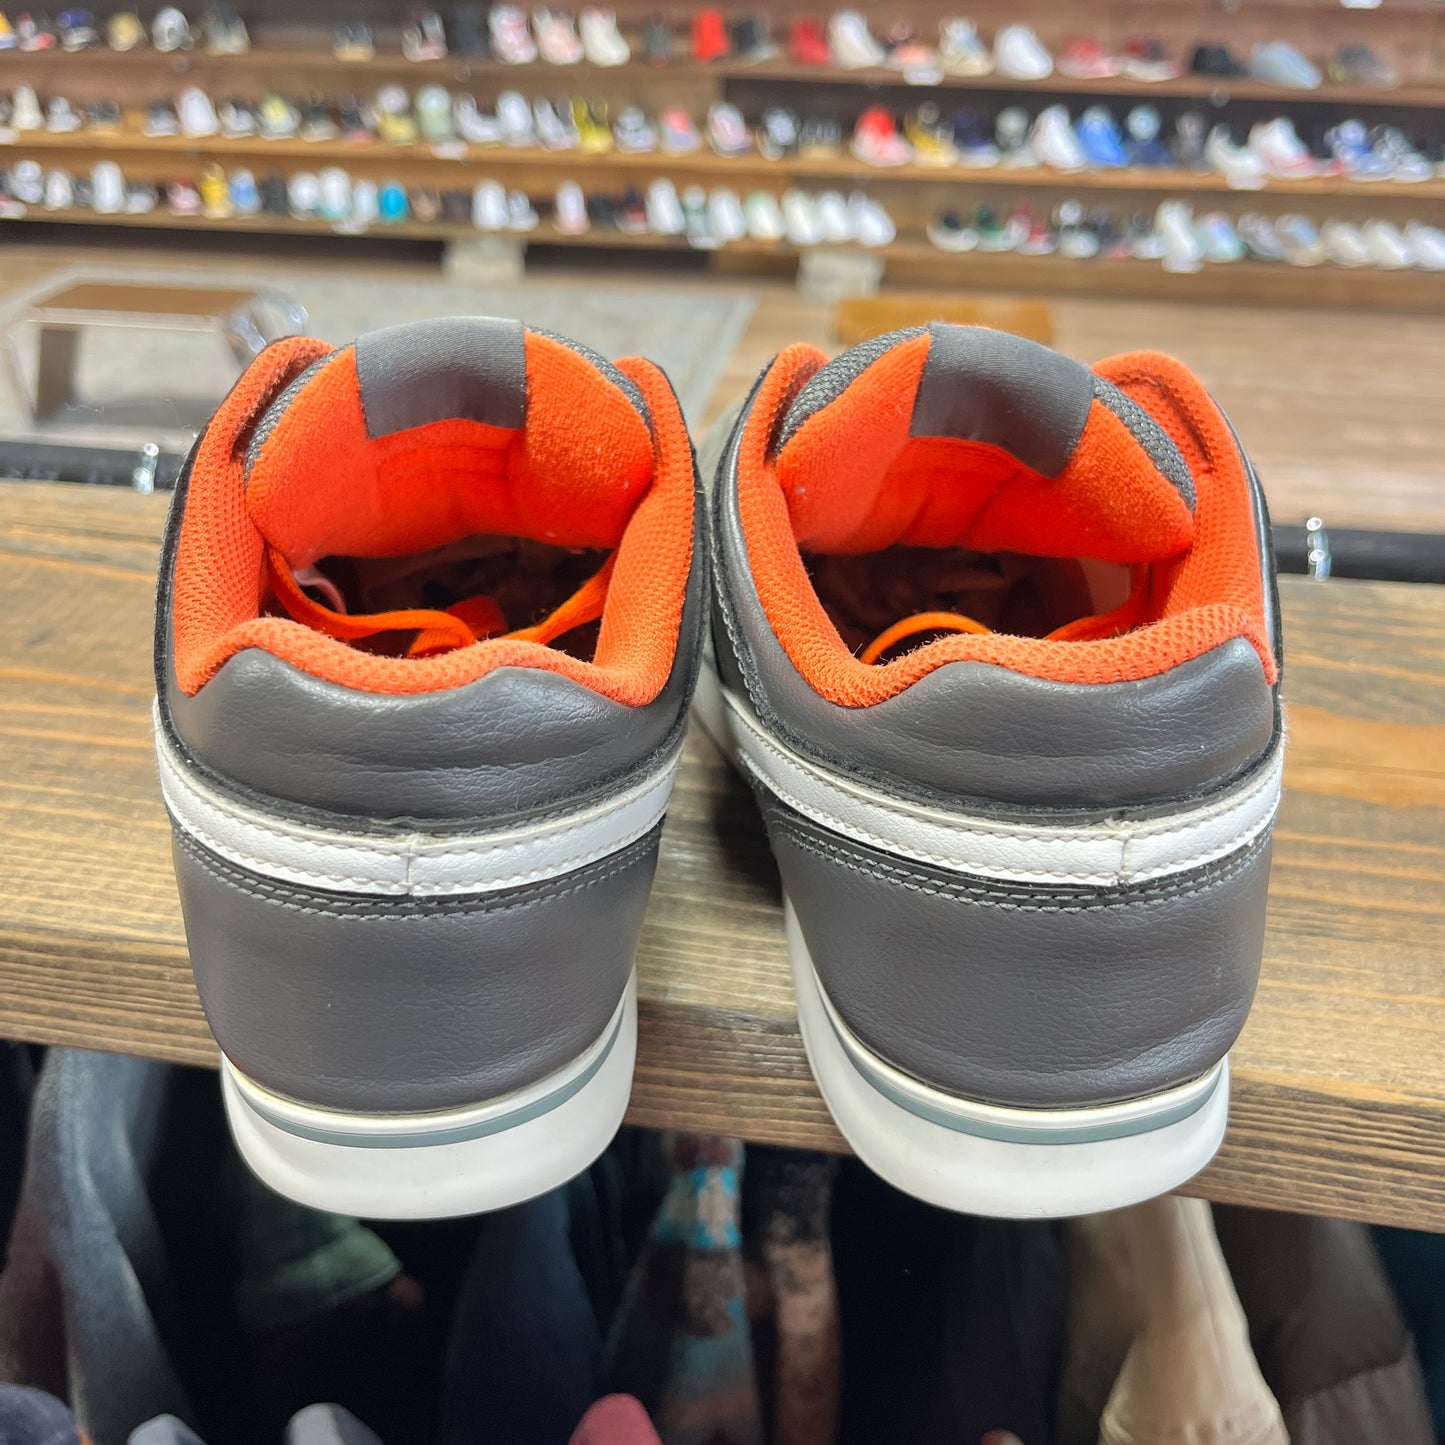 Nike 6.0 Skate Shoe 'Grey Suede' Size 9